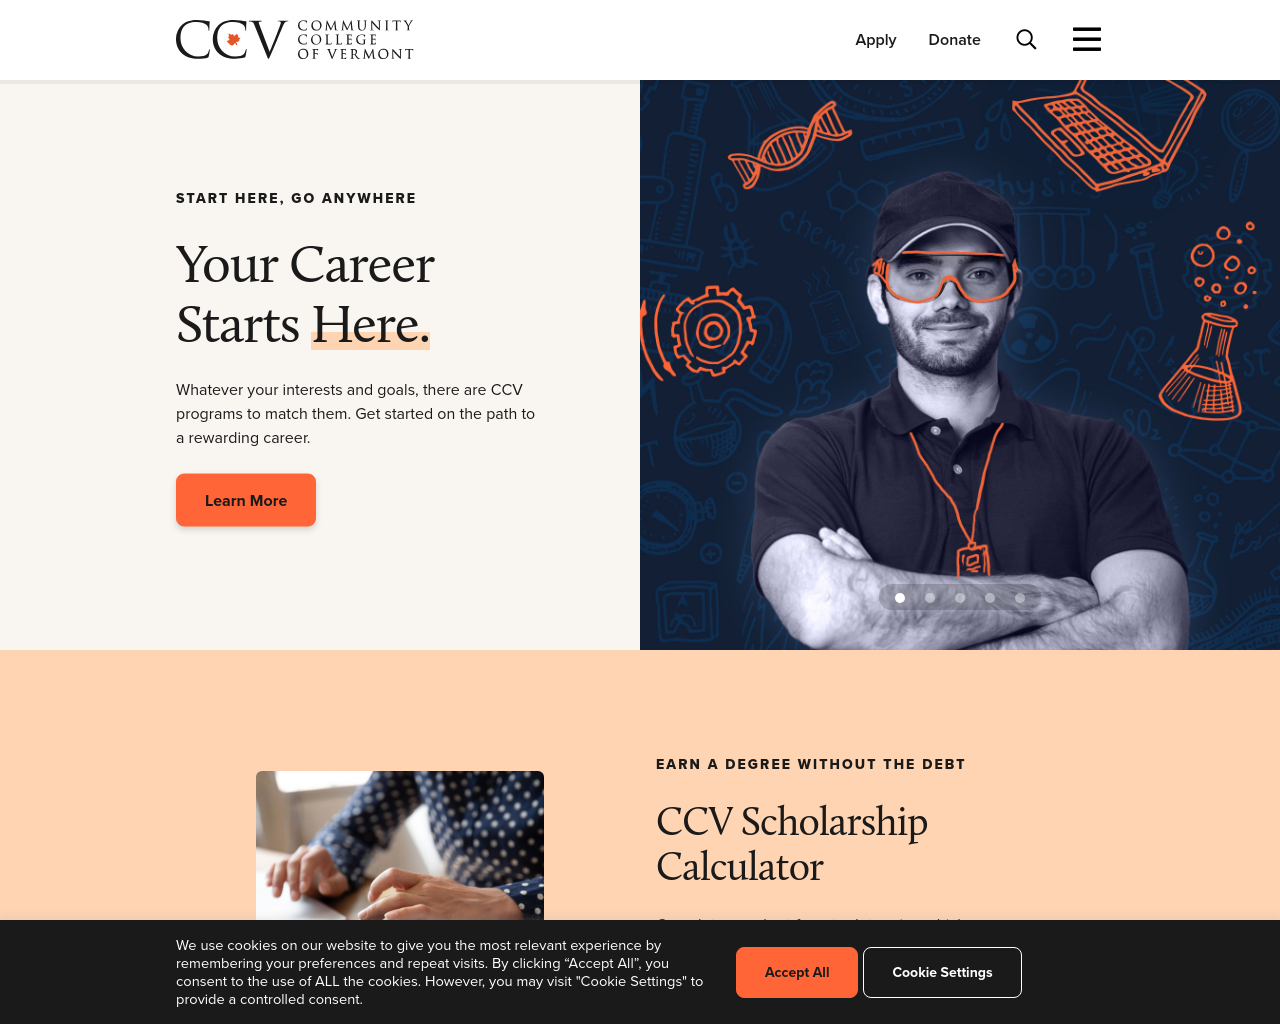 ccv.edu